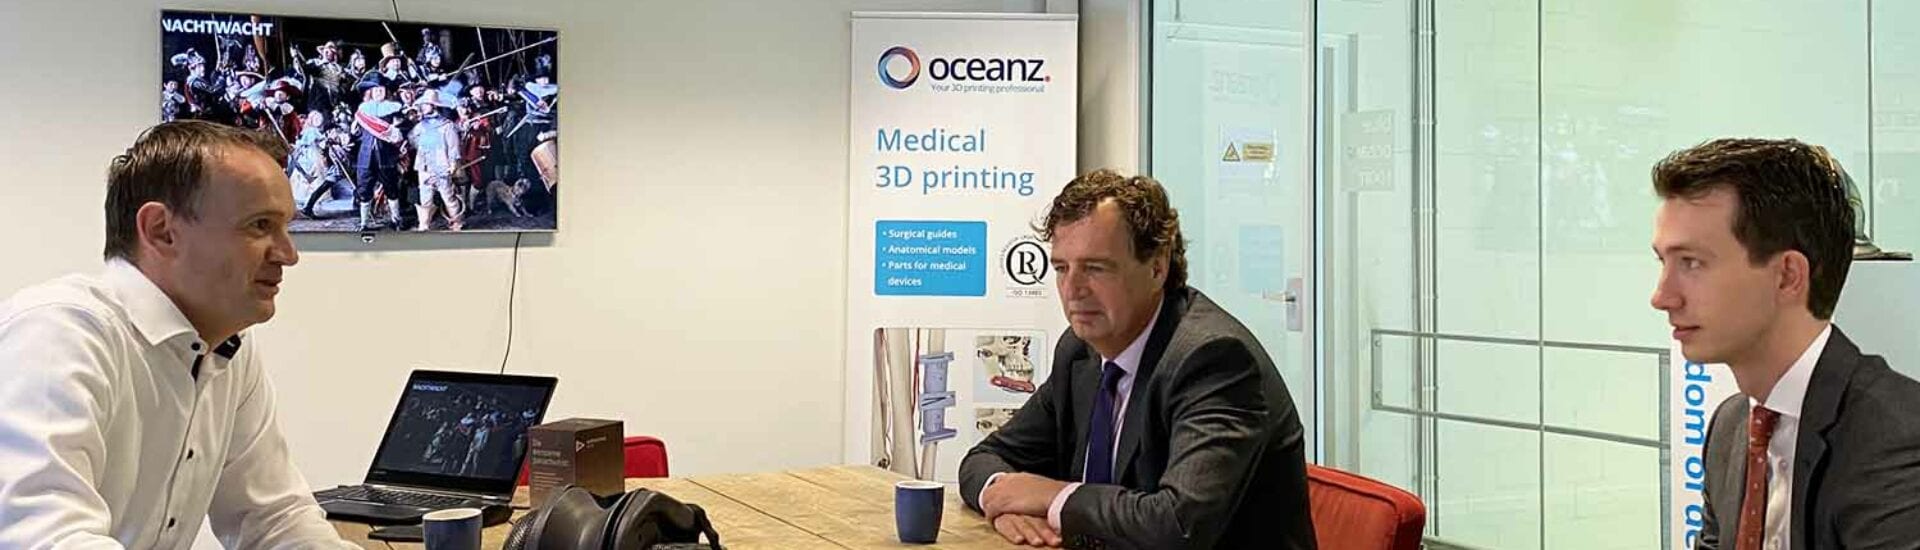 Burgemeester Verhulst Ede Oceanz 3D Printing 2